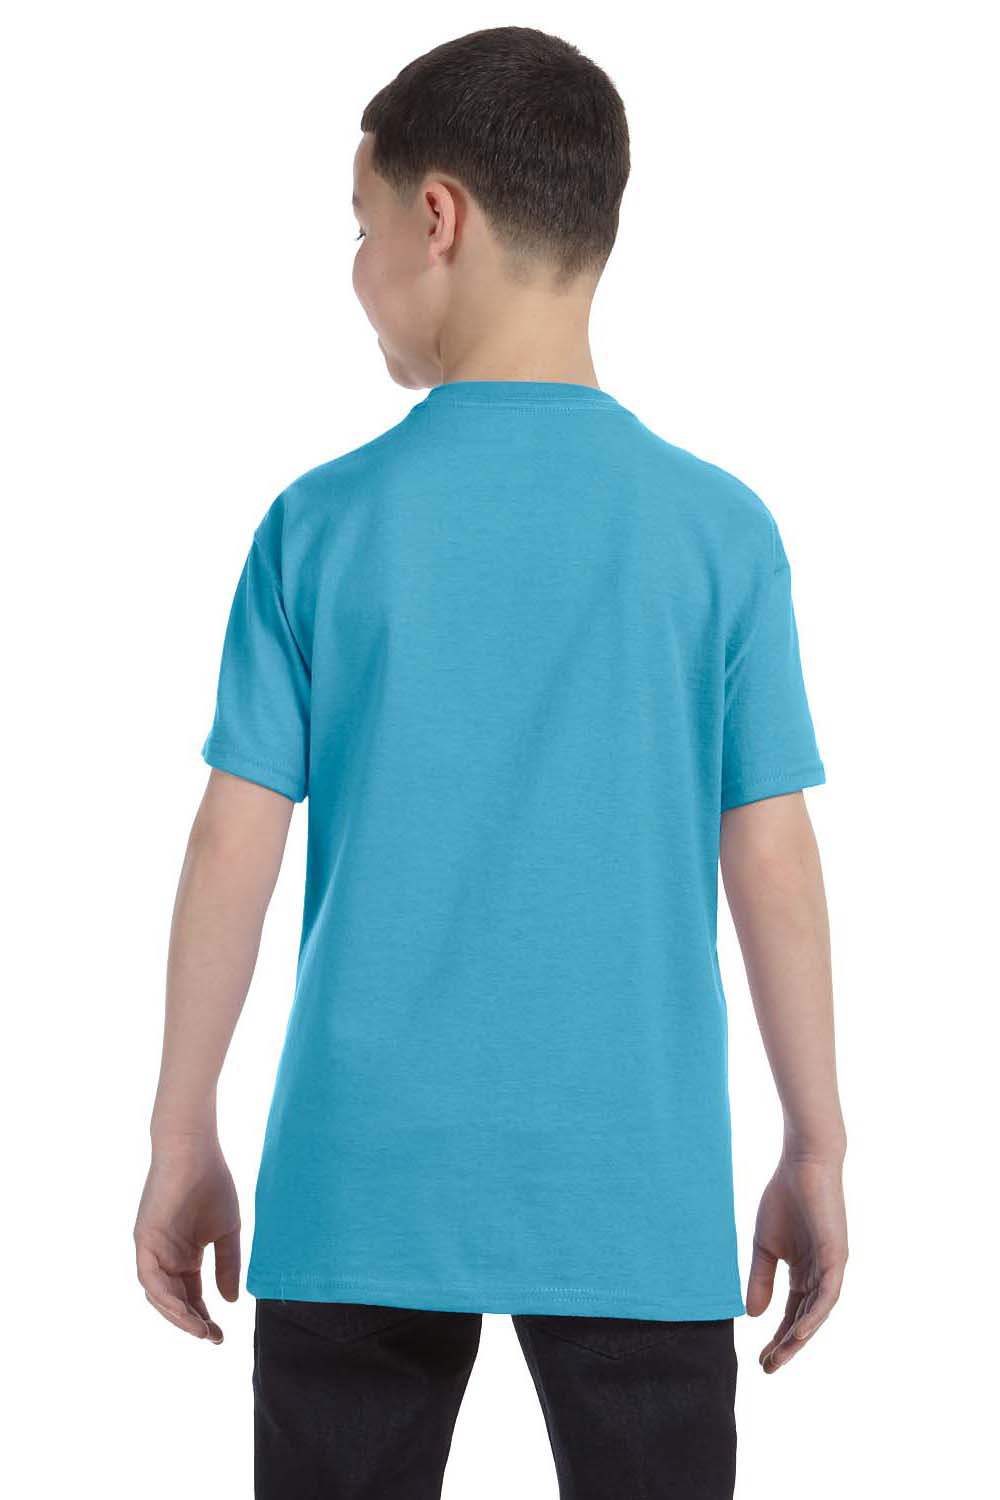 Jerzees 29B Youth Dri-Power Moisture Wicking Short Sleeve Crewneck T-Shirt Aquatic Blue Back